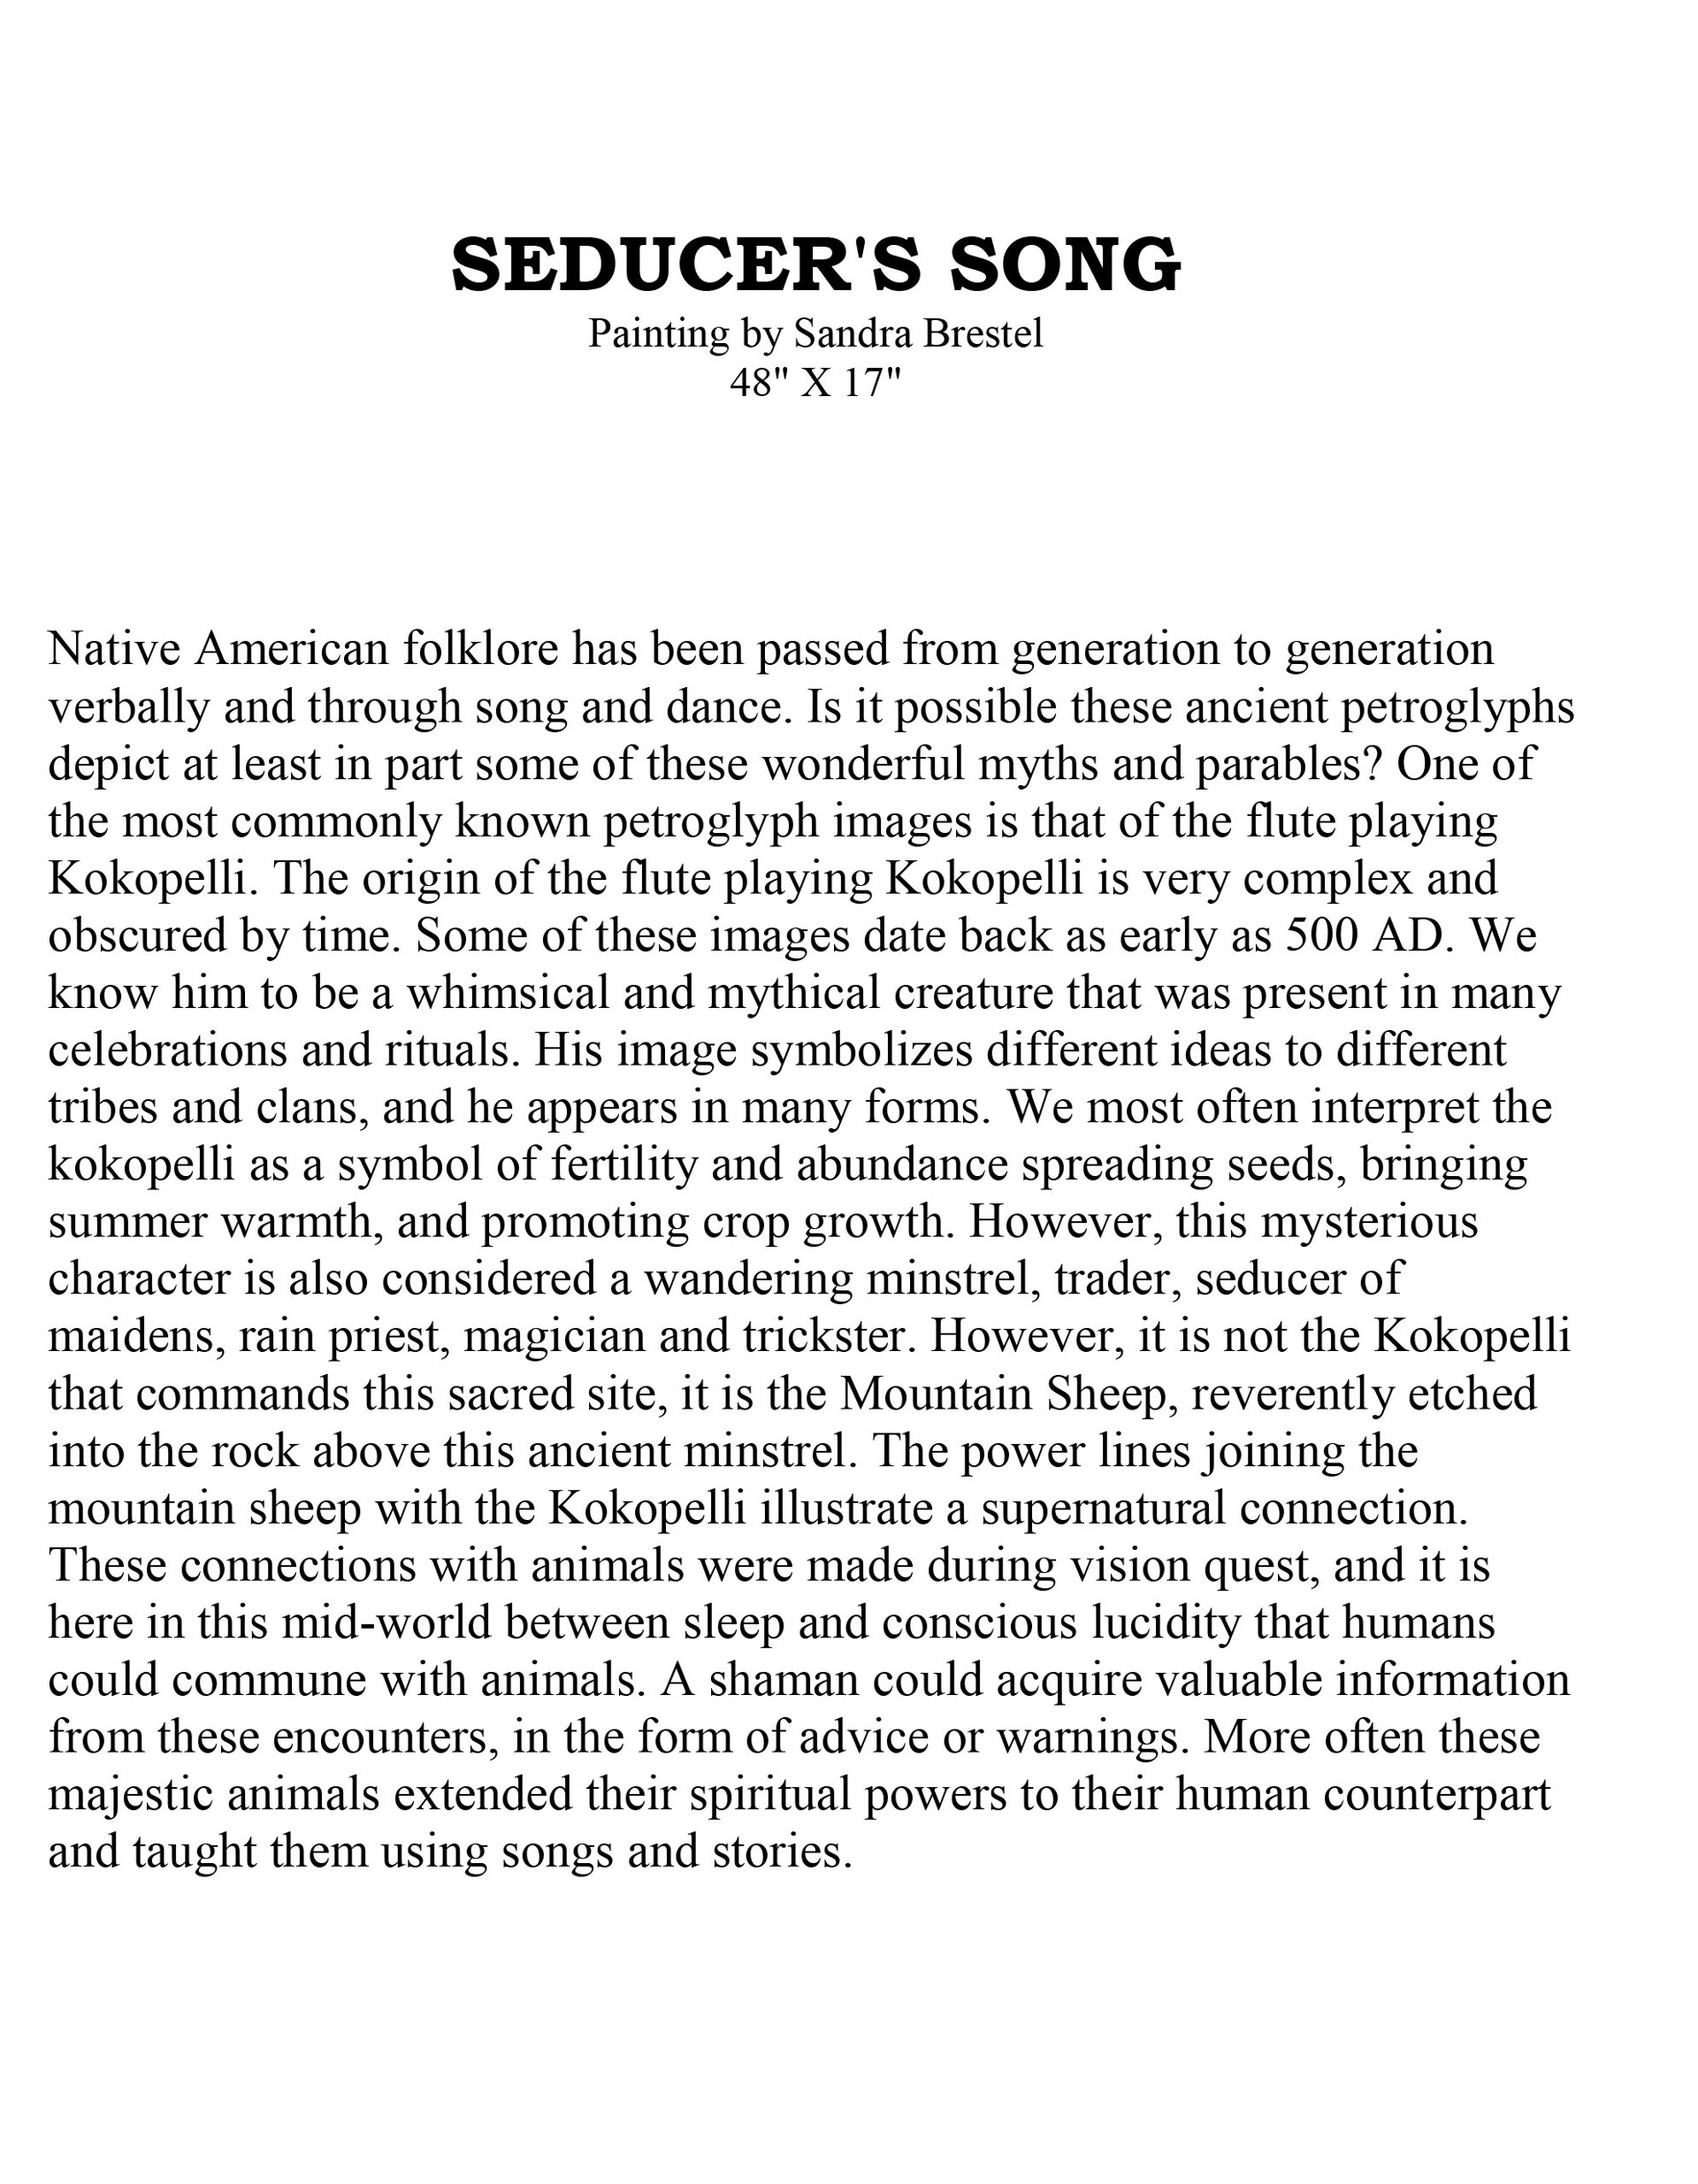 Seducer's Song by Sandra Brestel Limited Editions